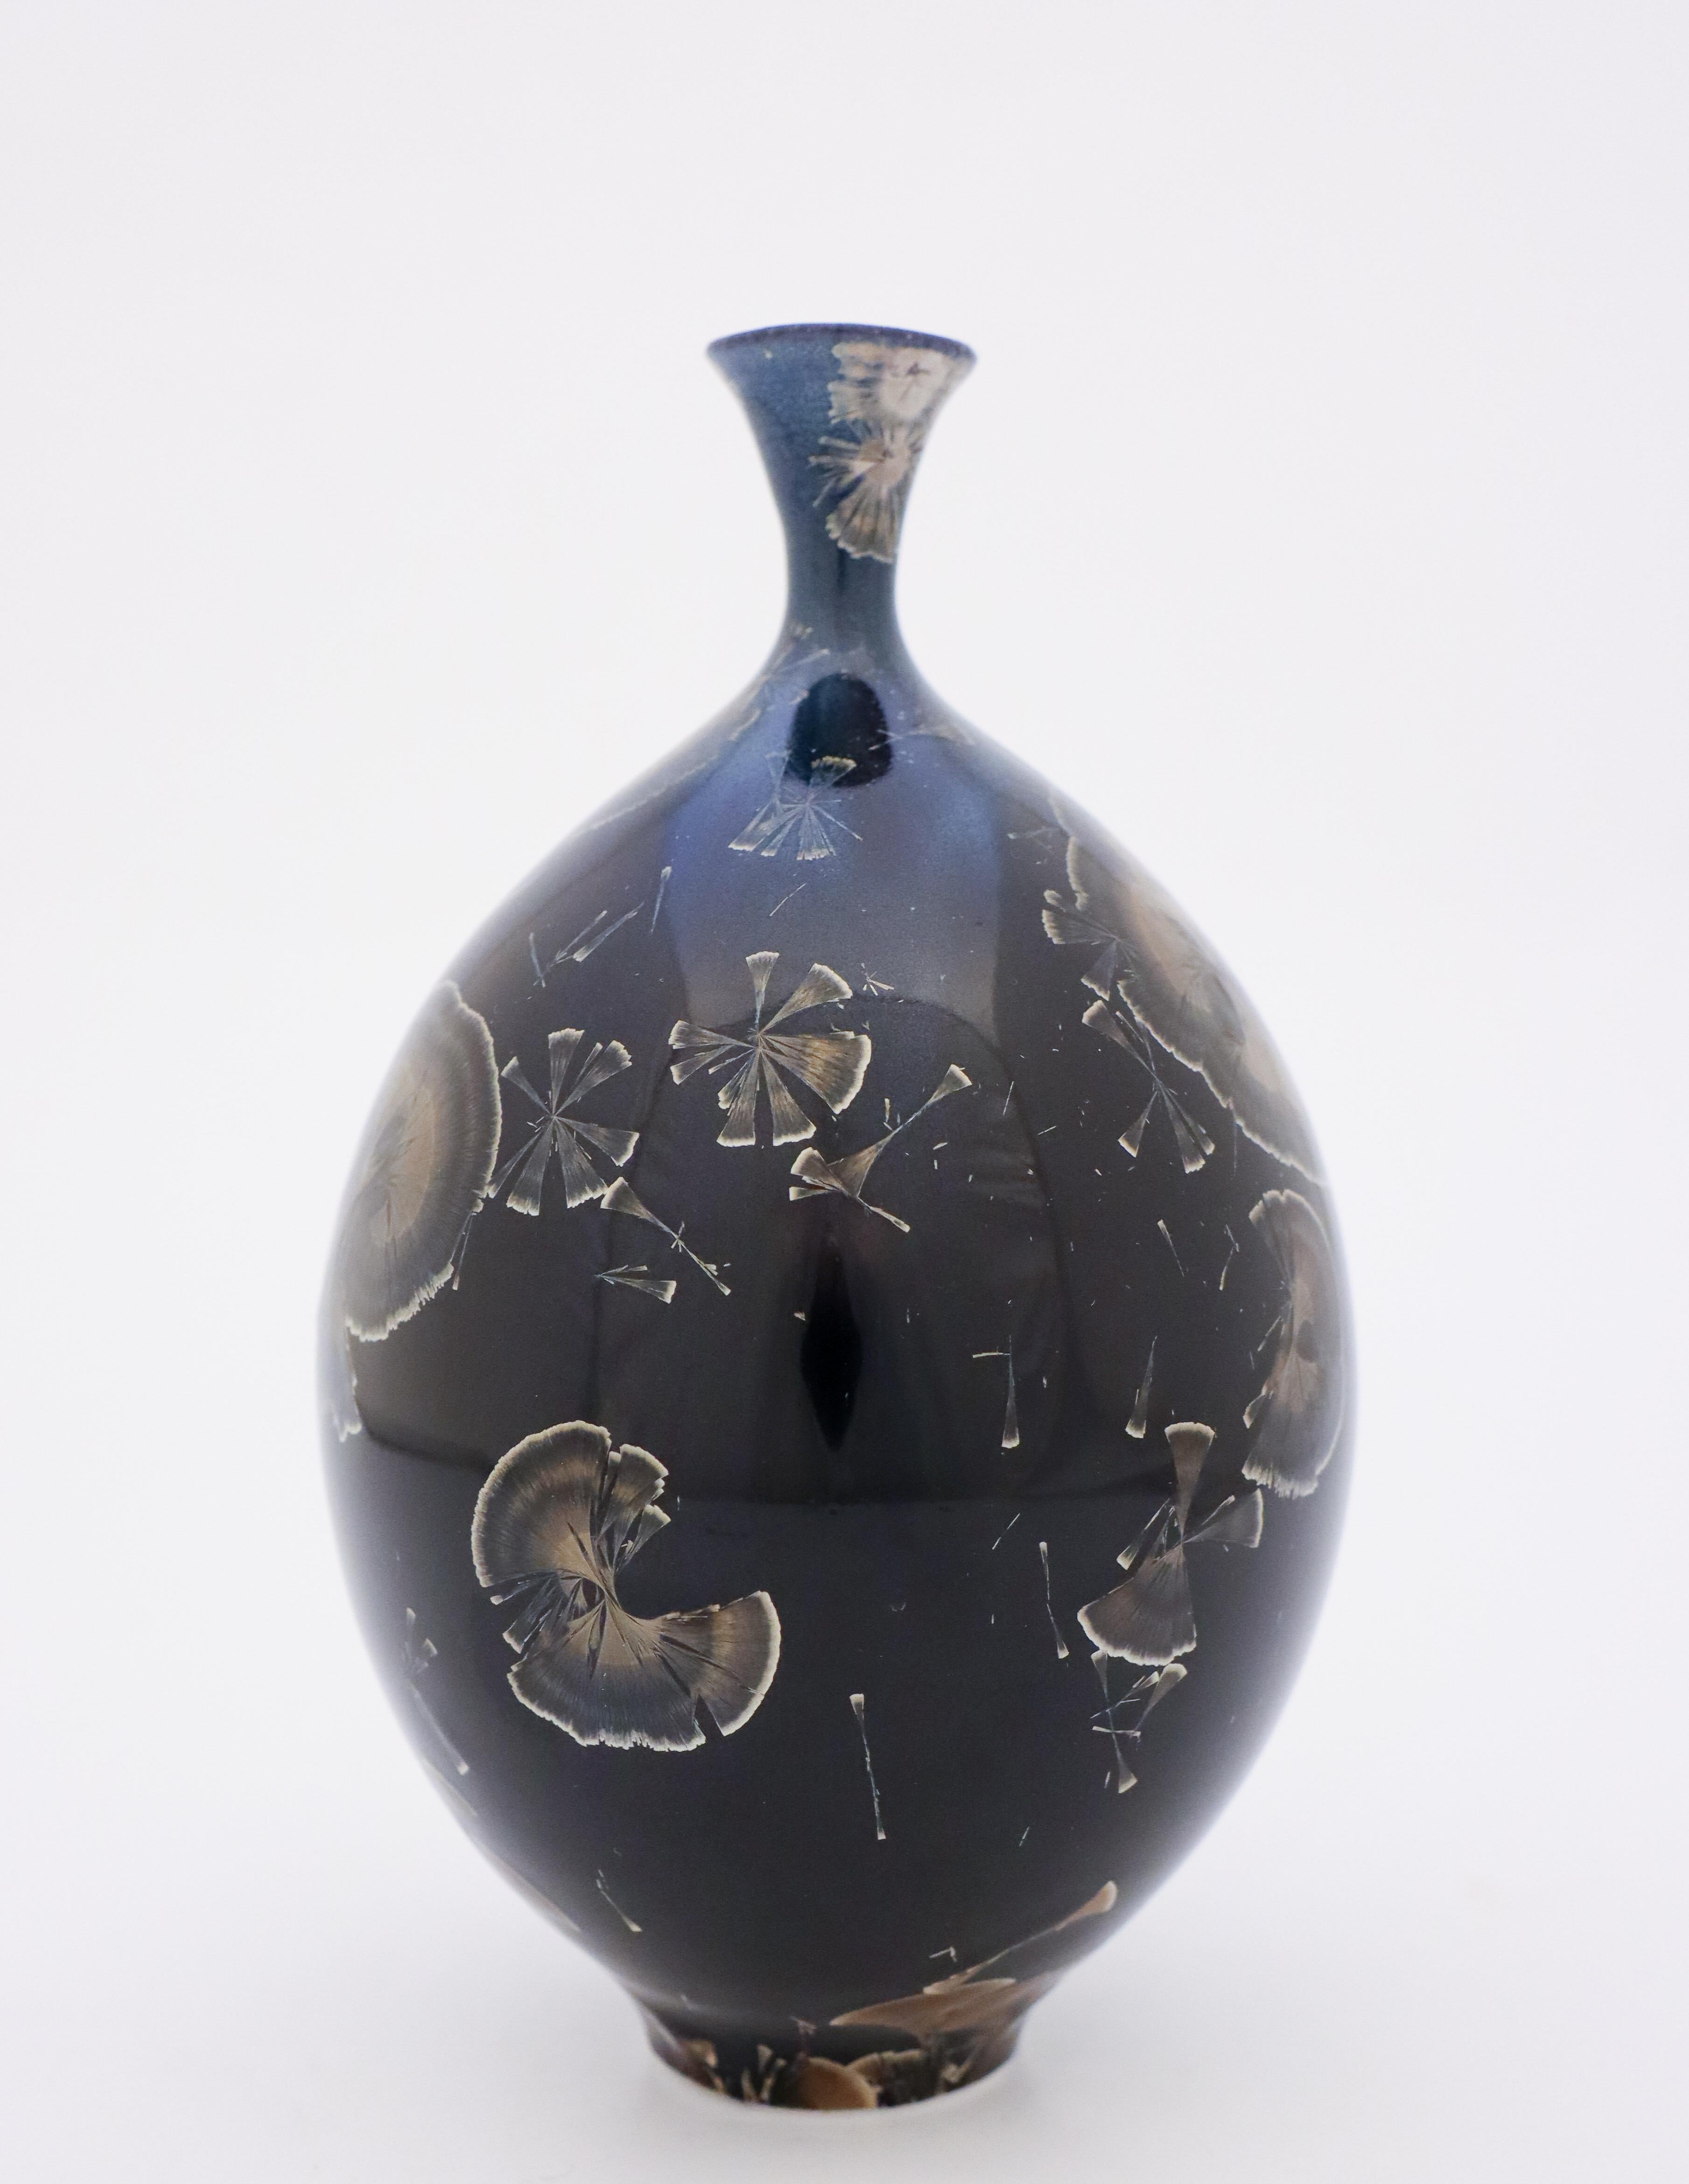 Glazed Isak Isaksson, Vase with Crystalline Glaze, Contemporary Swedish Ceramicist